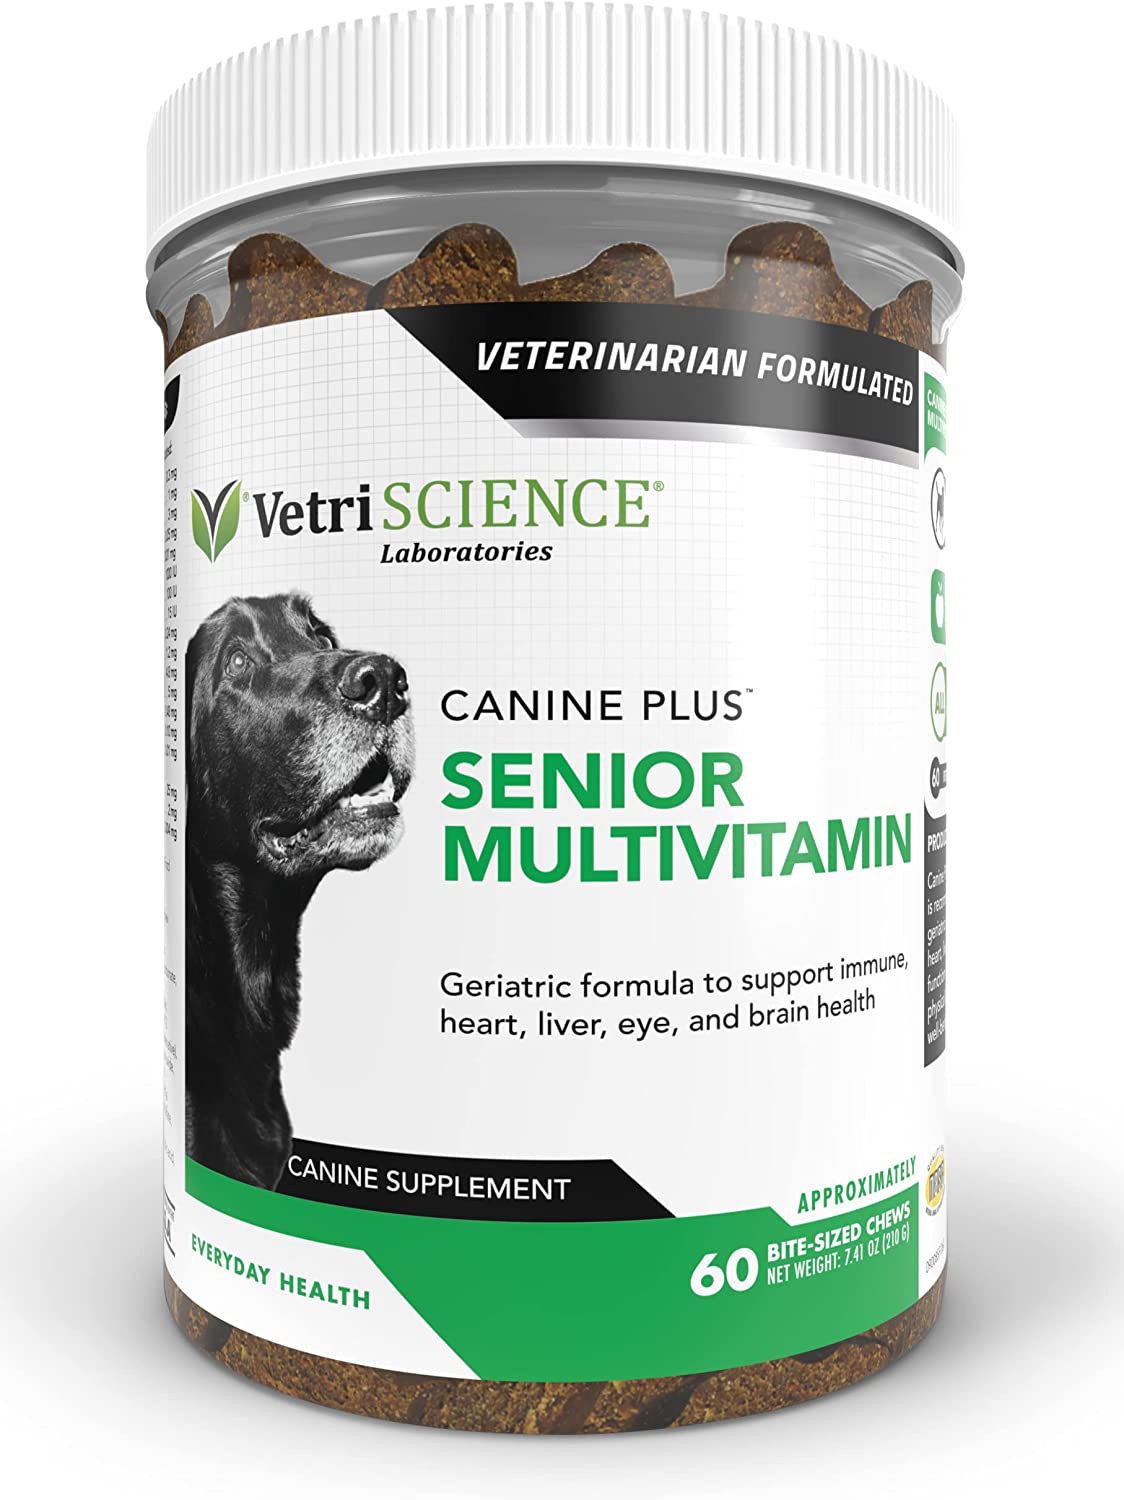 VetriScience Canine Plus Multivitamin for Senior Dogs